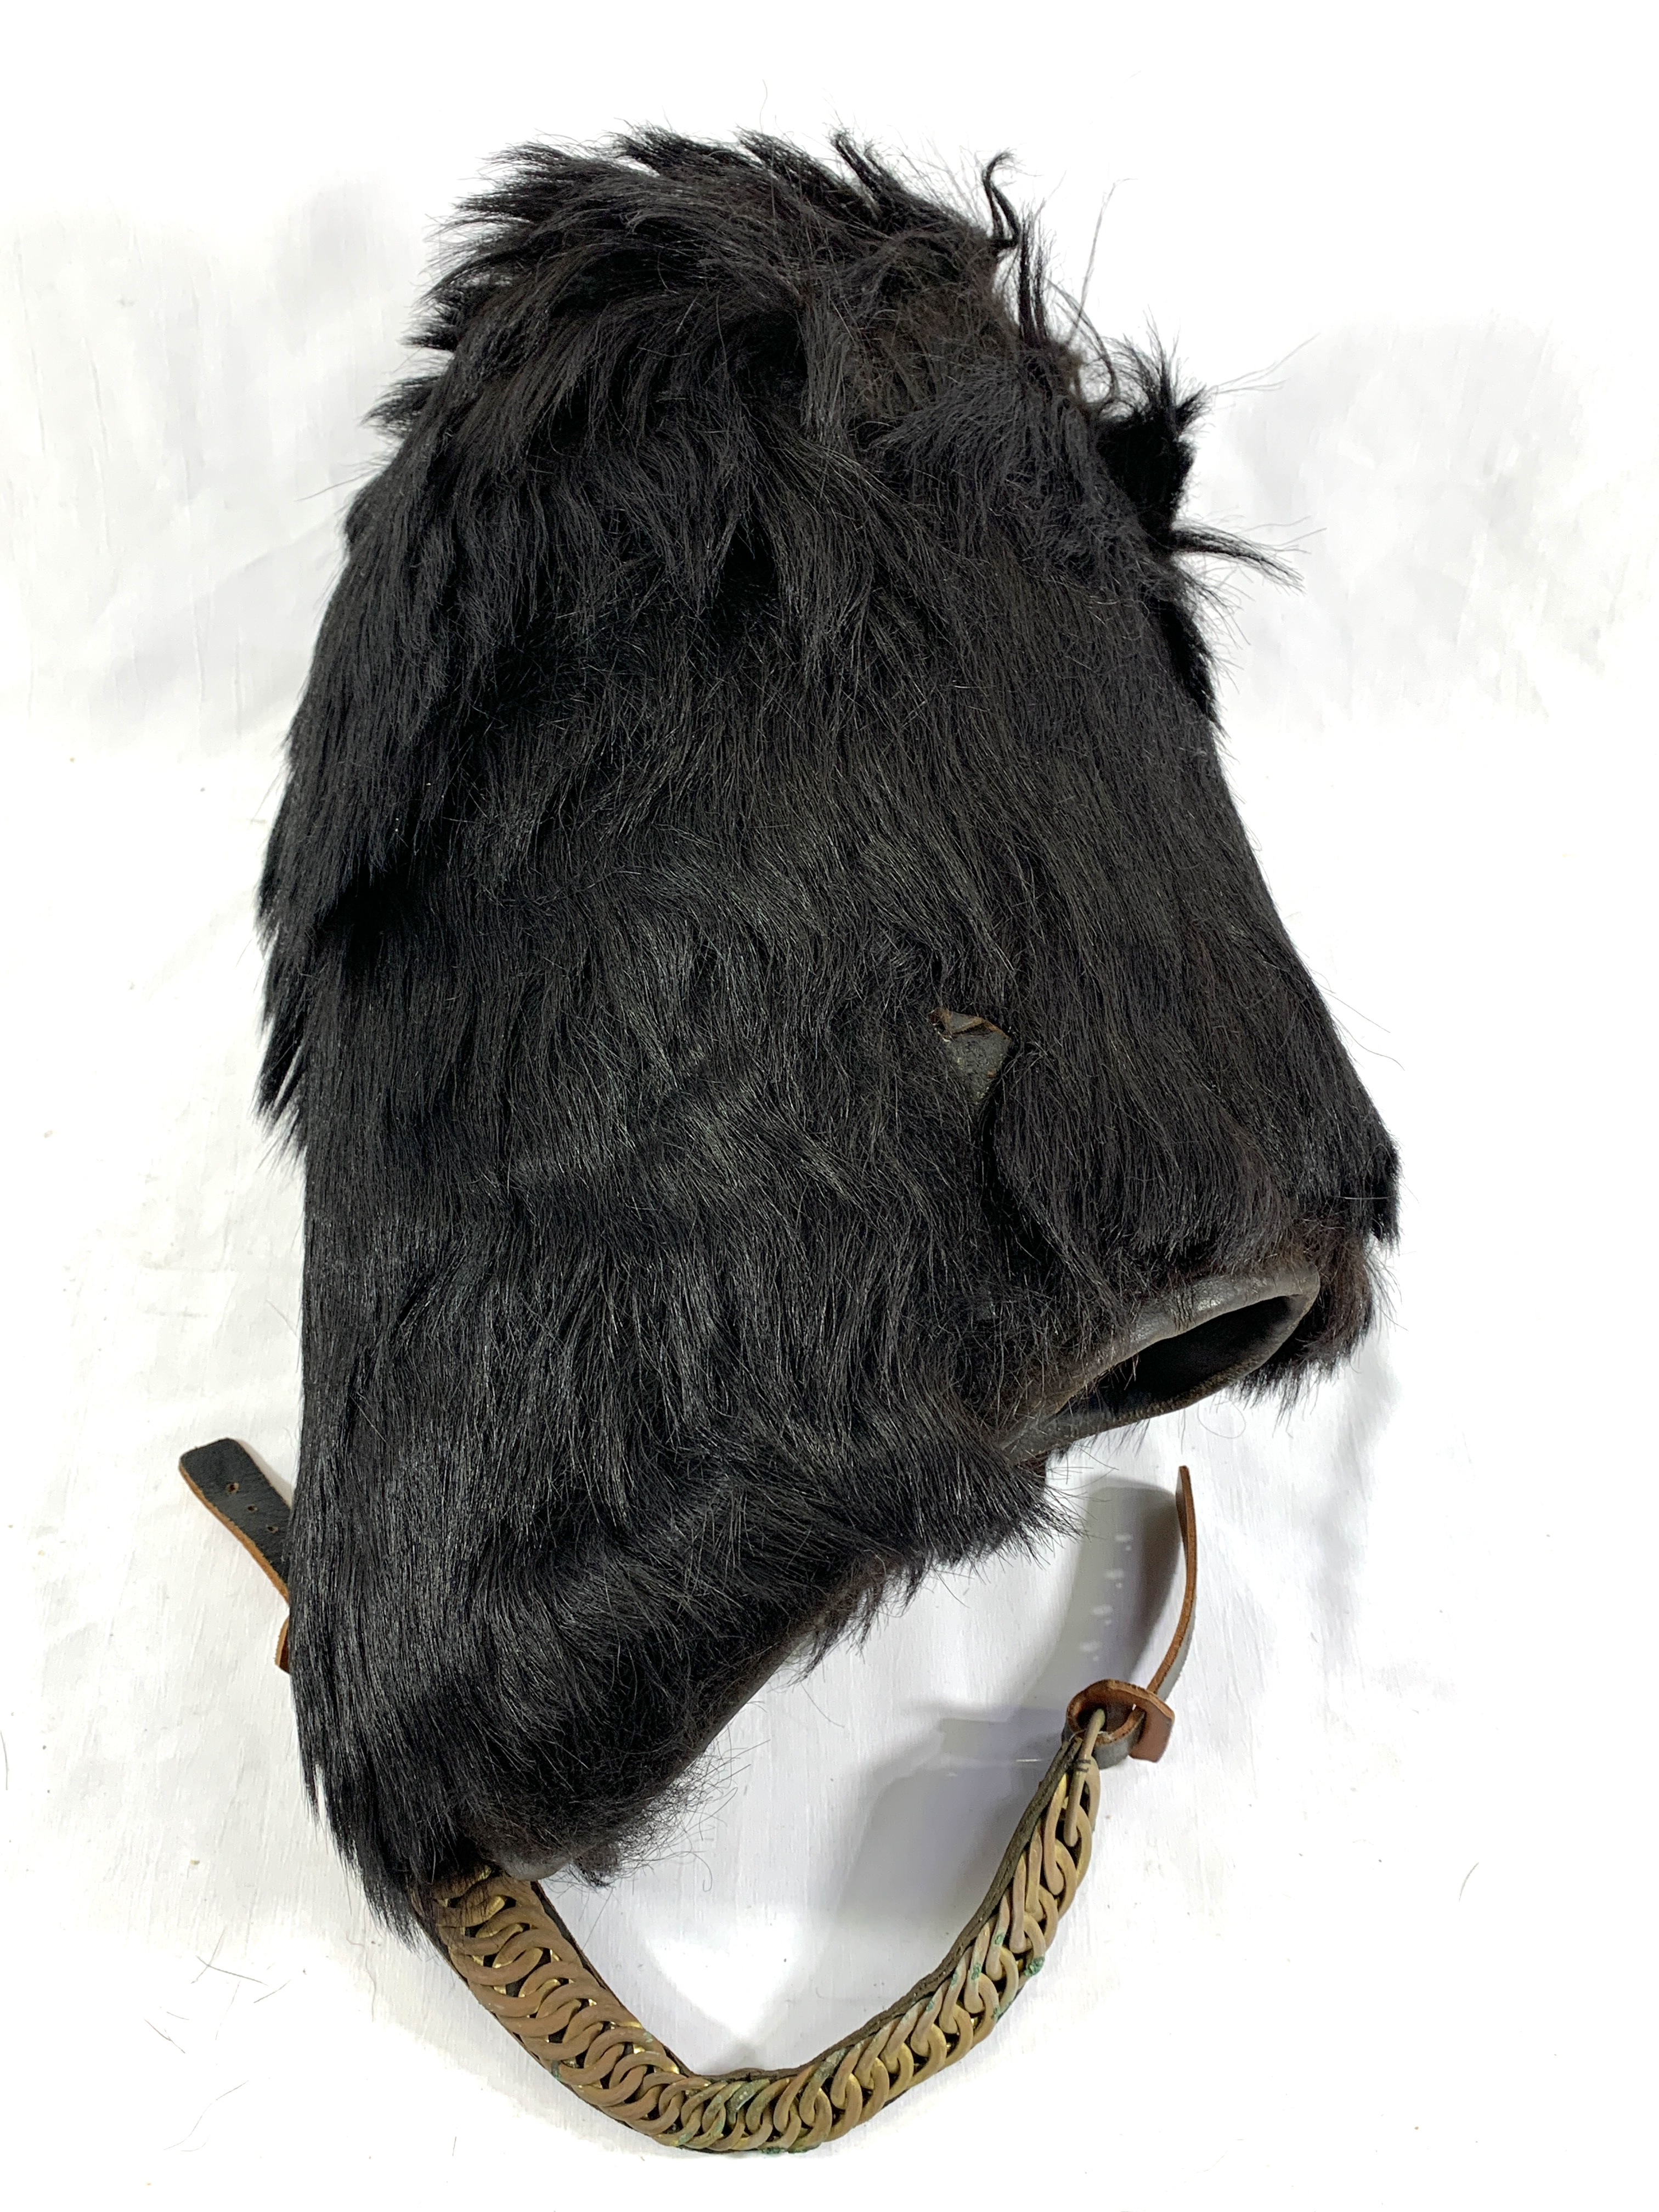 A Guard's bearskin hat - Image 2 of 3